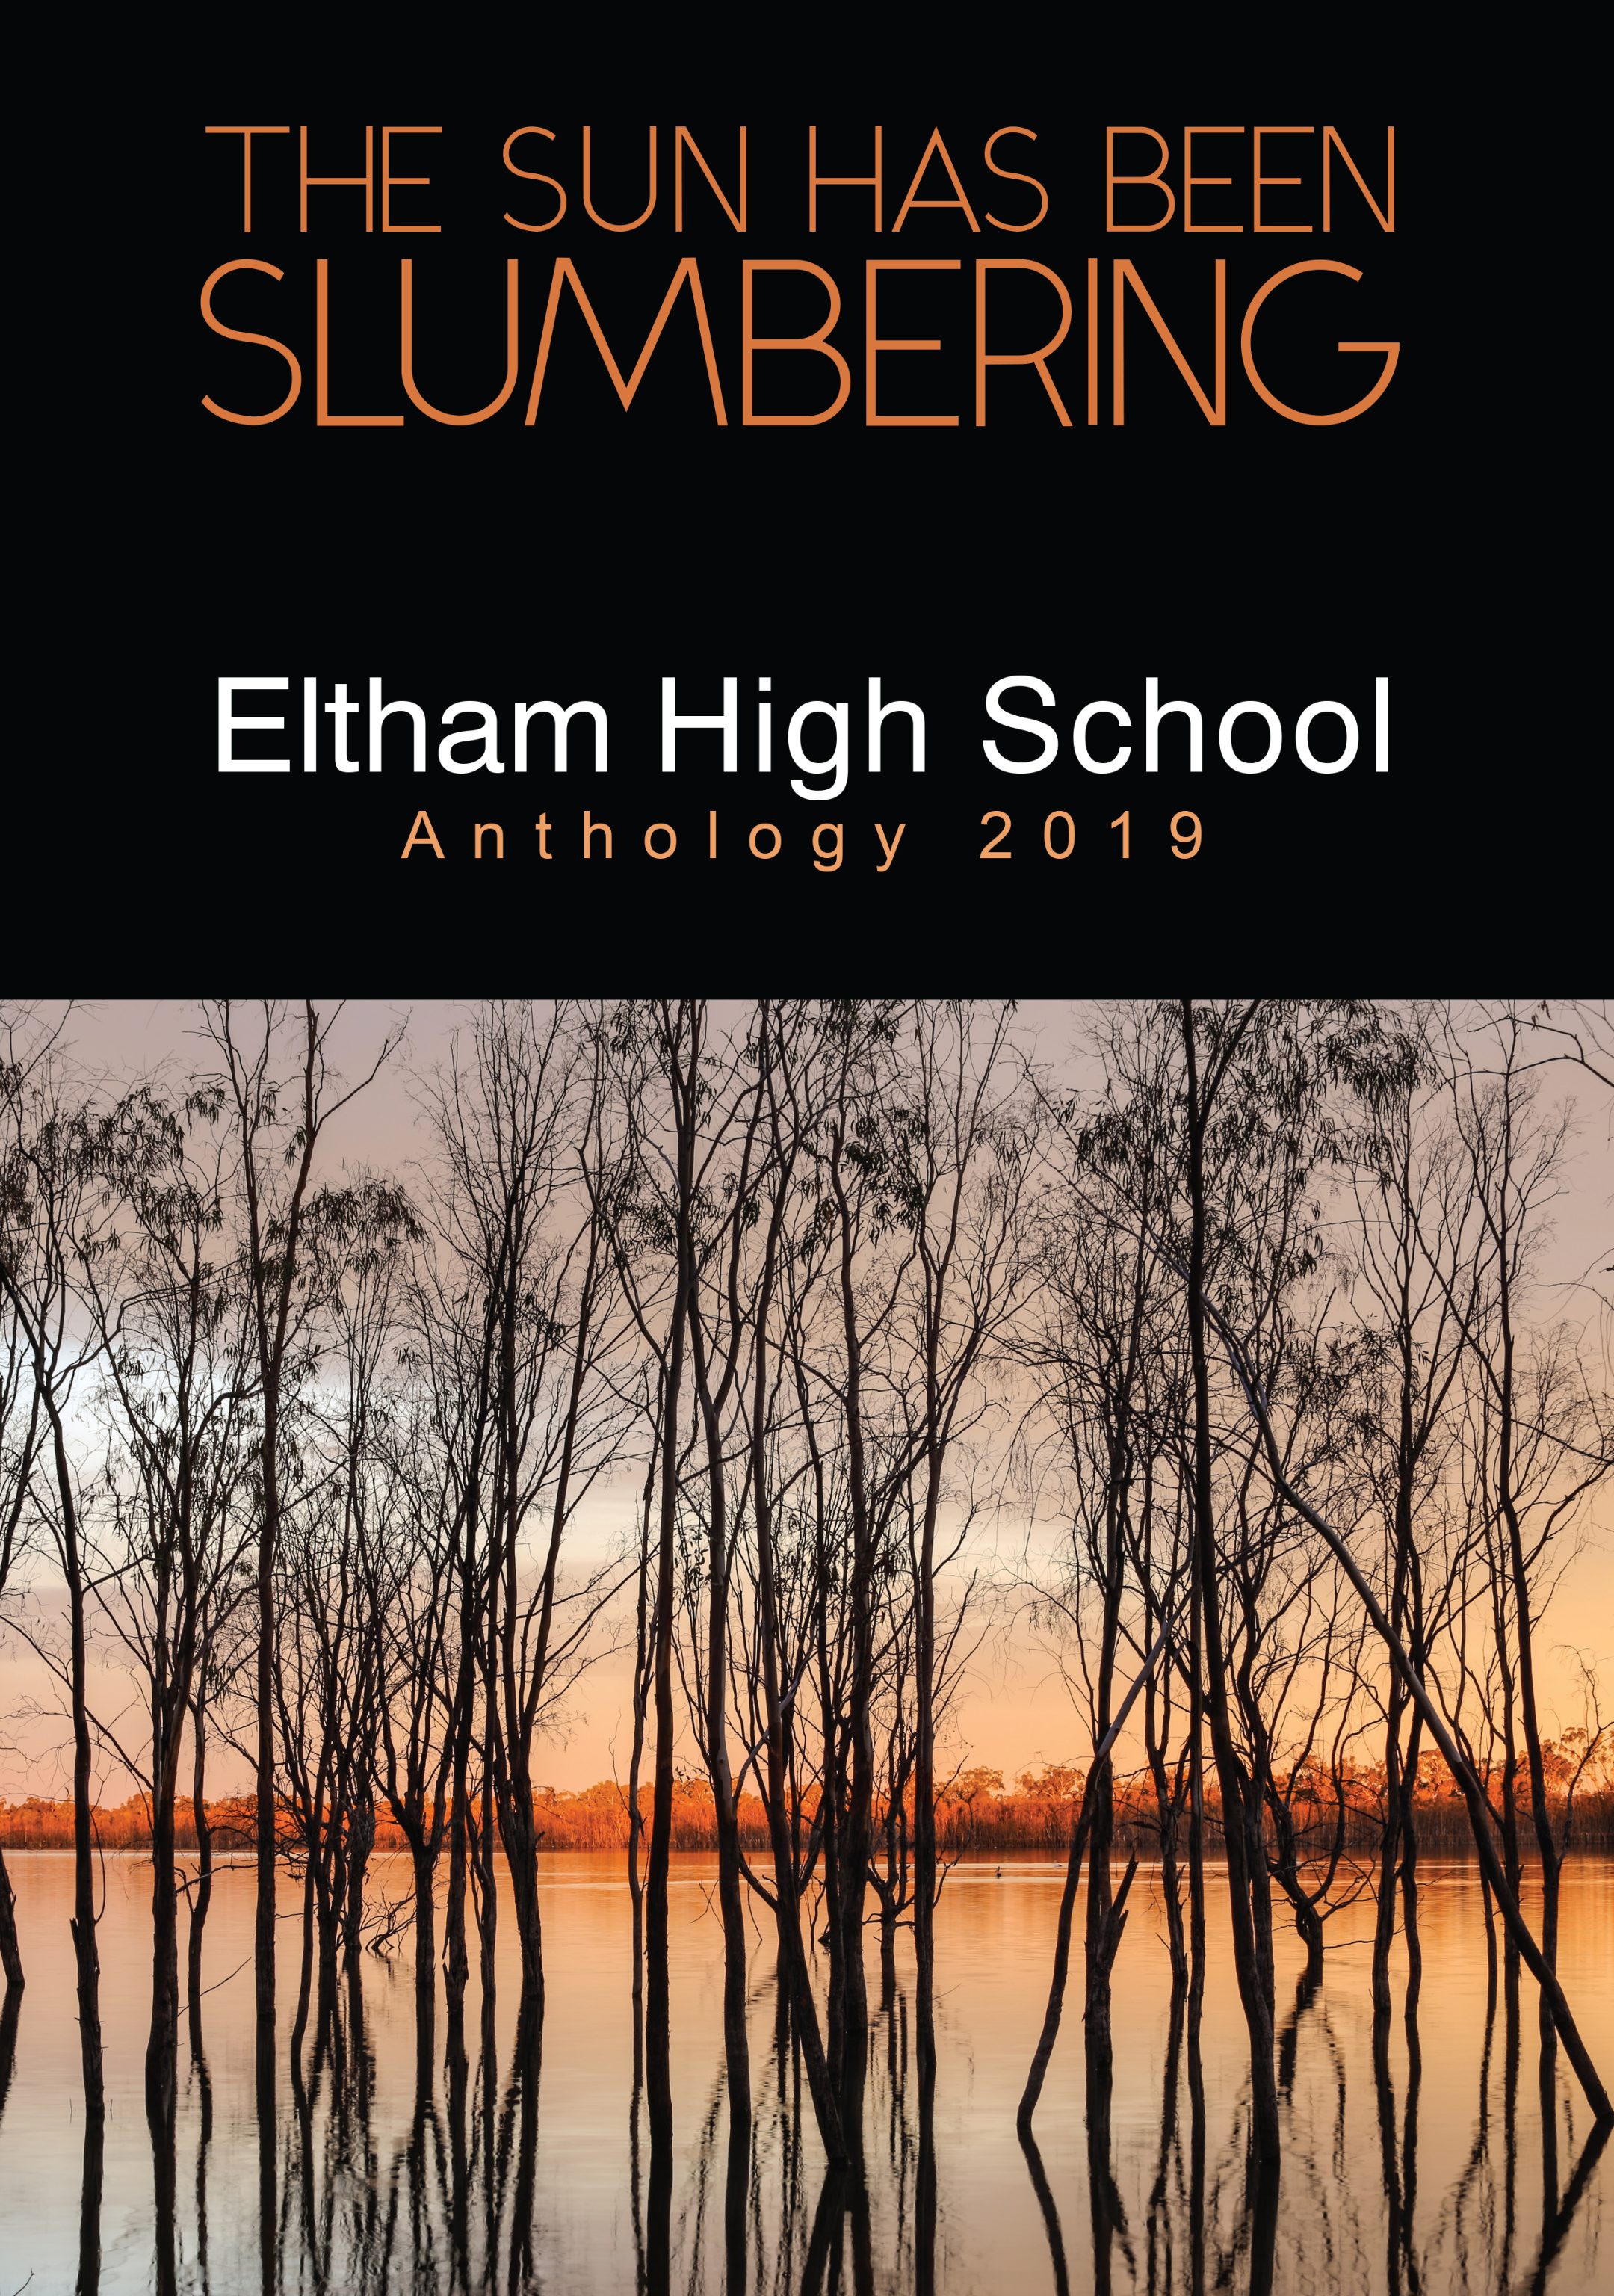 Eltham High School Anthology 2019: The Sun Has Been Slumbering